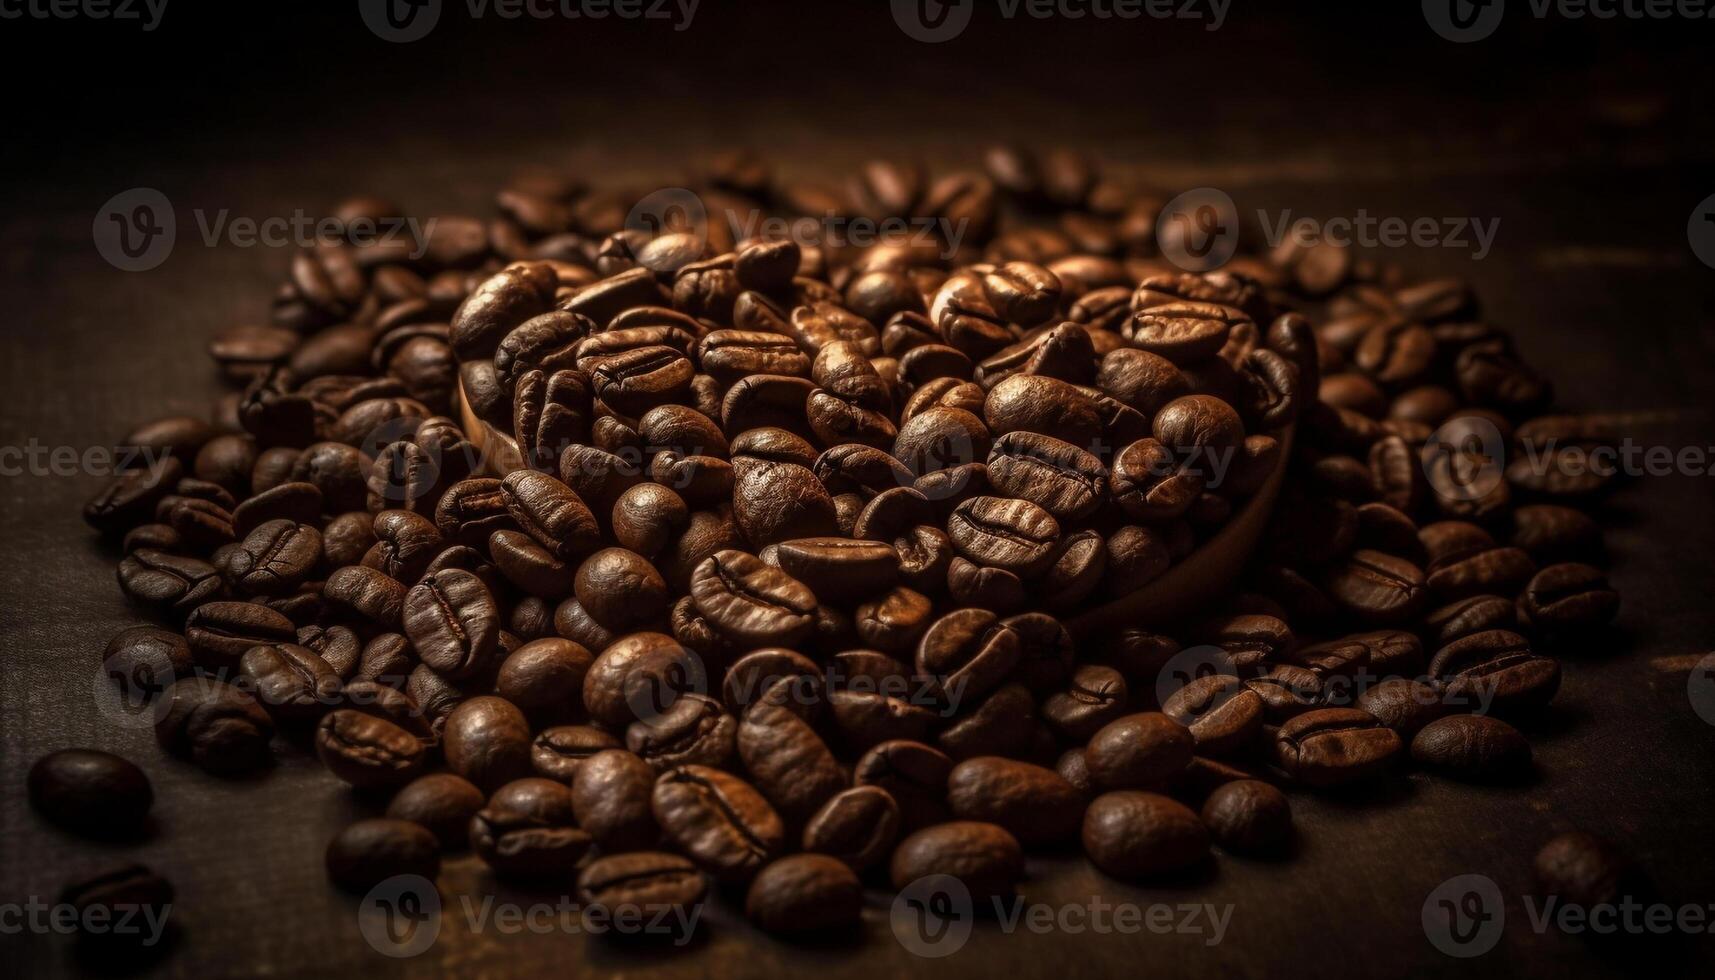 Freshly ground dark bean coffee, a scented caffeine addiction generated by AI photo